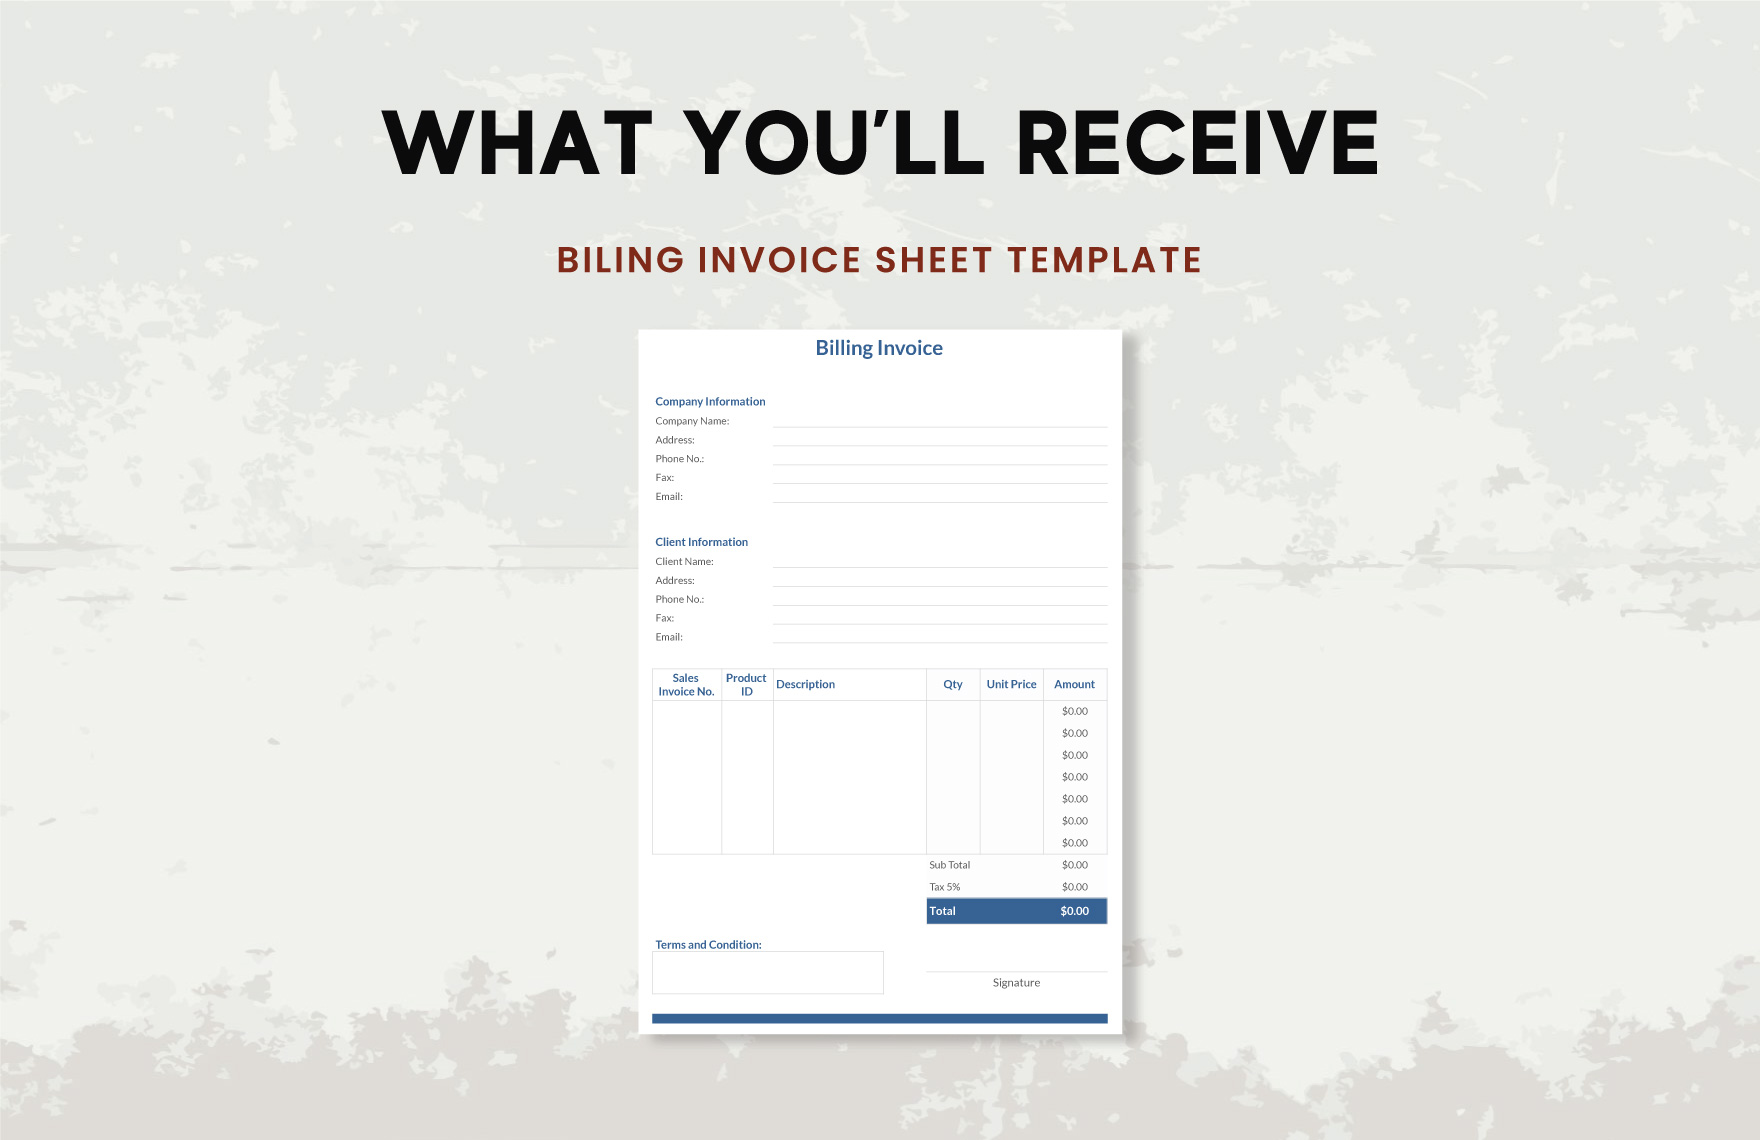 Billing Invoice Sheet Template